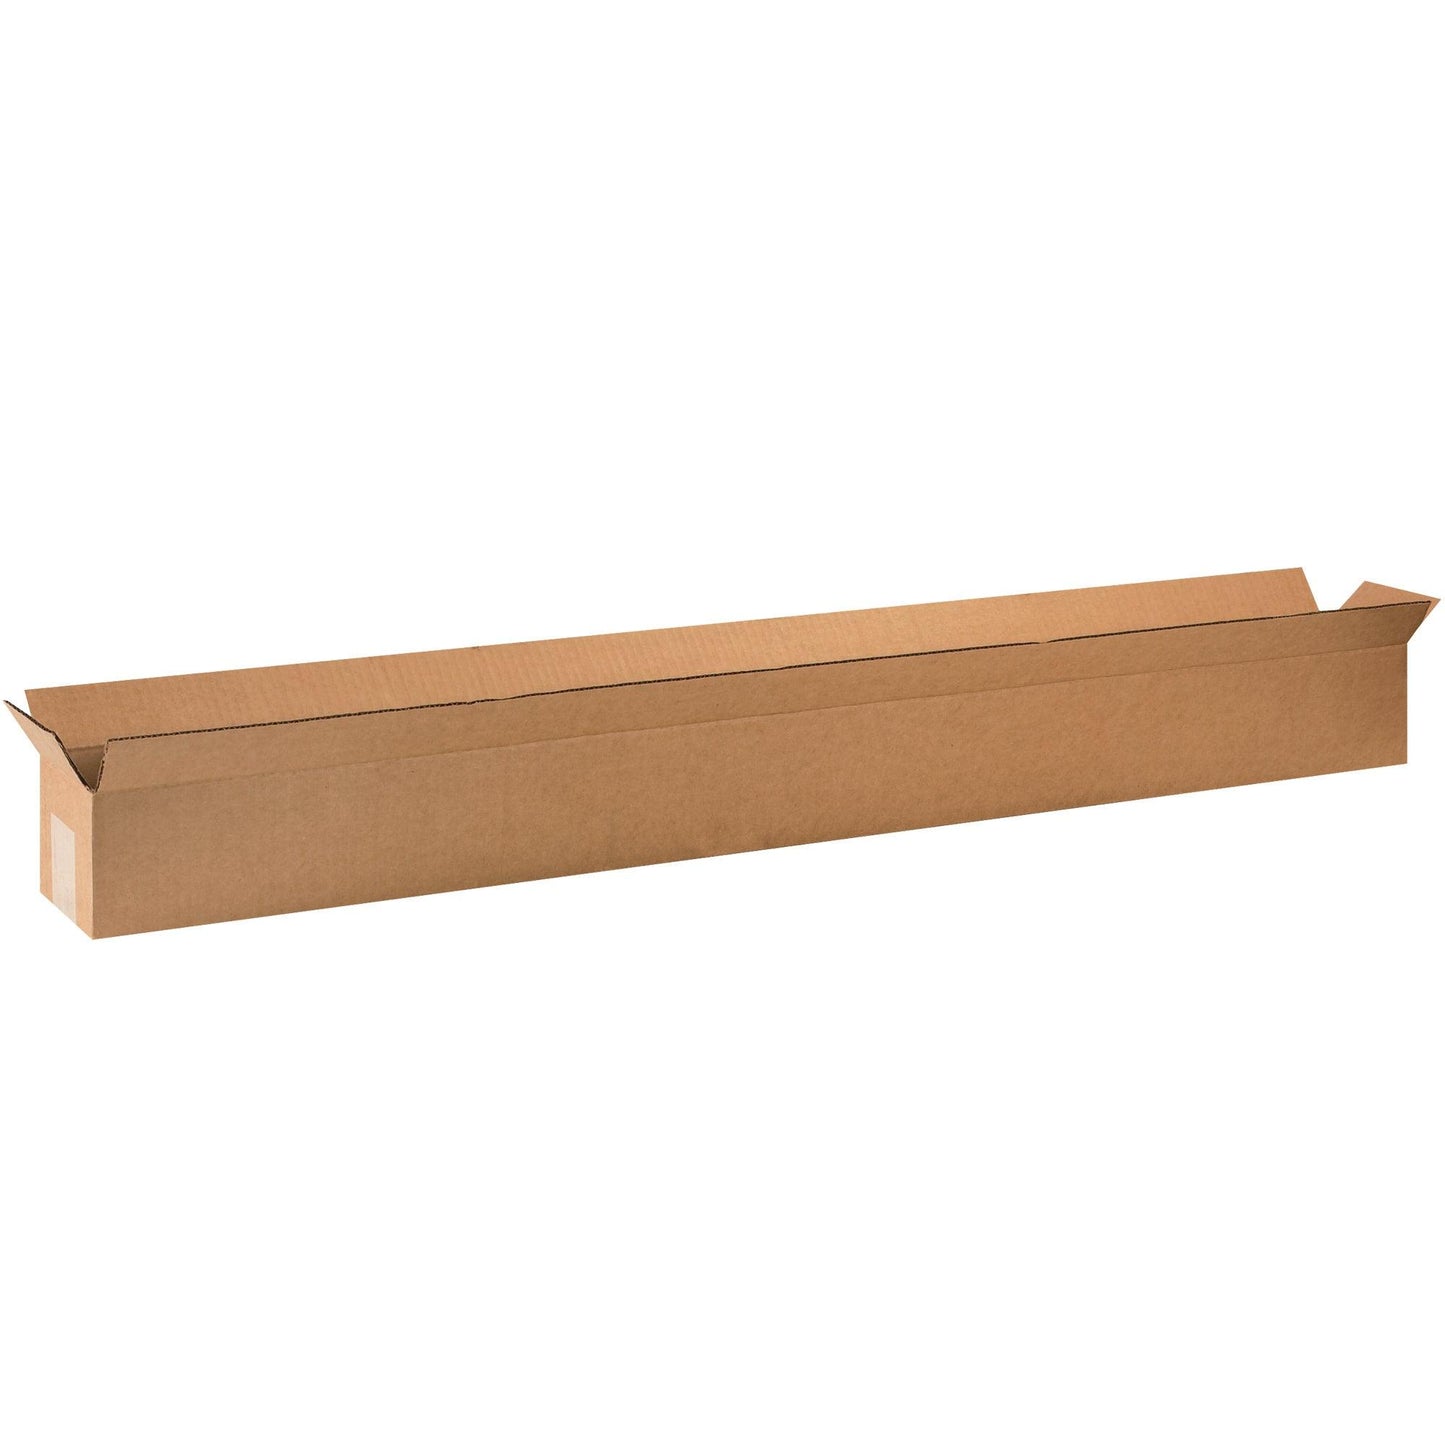 48 x 4 x 4" Long Corrugated Boxes - 4844